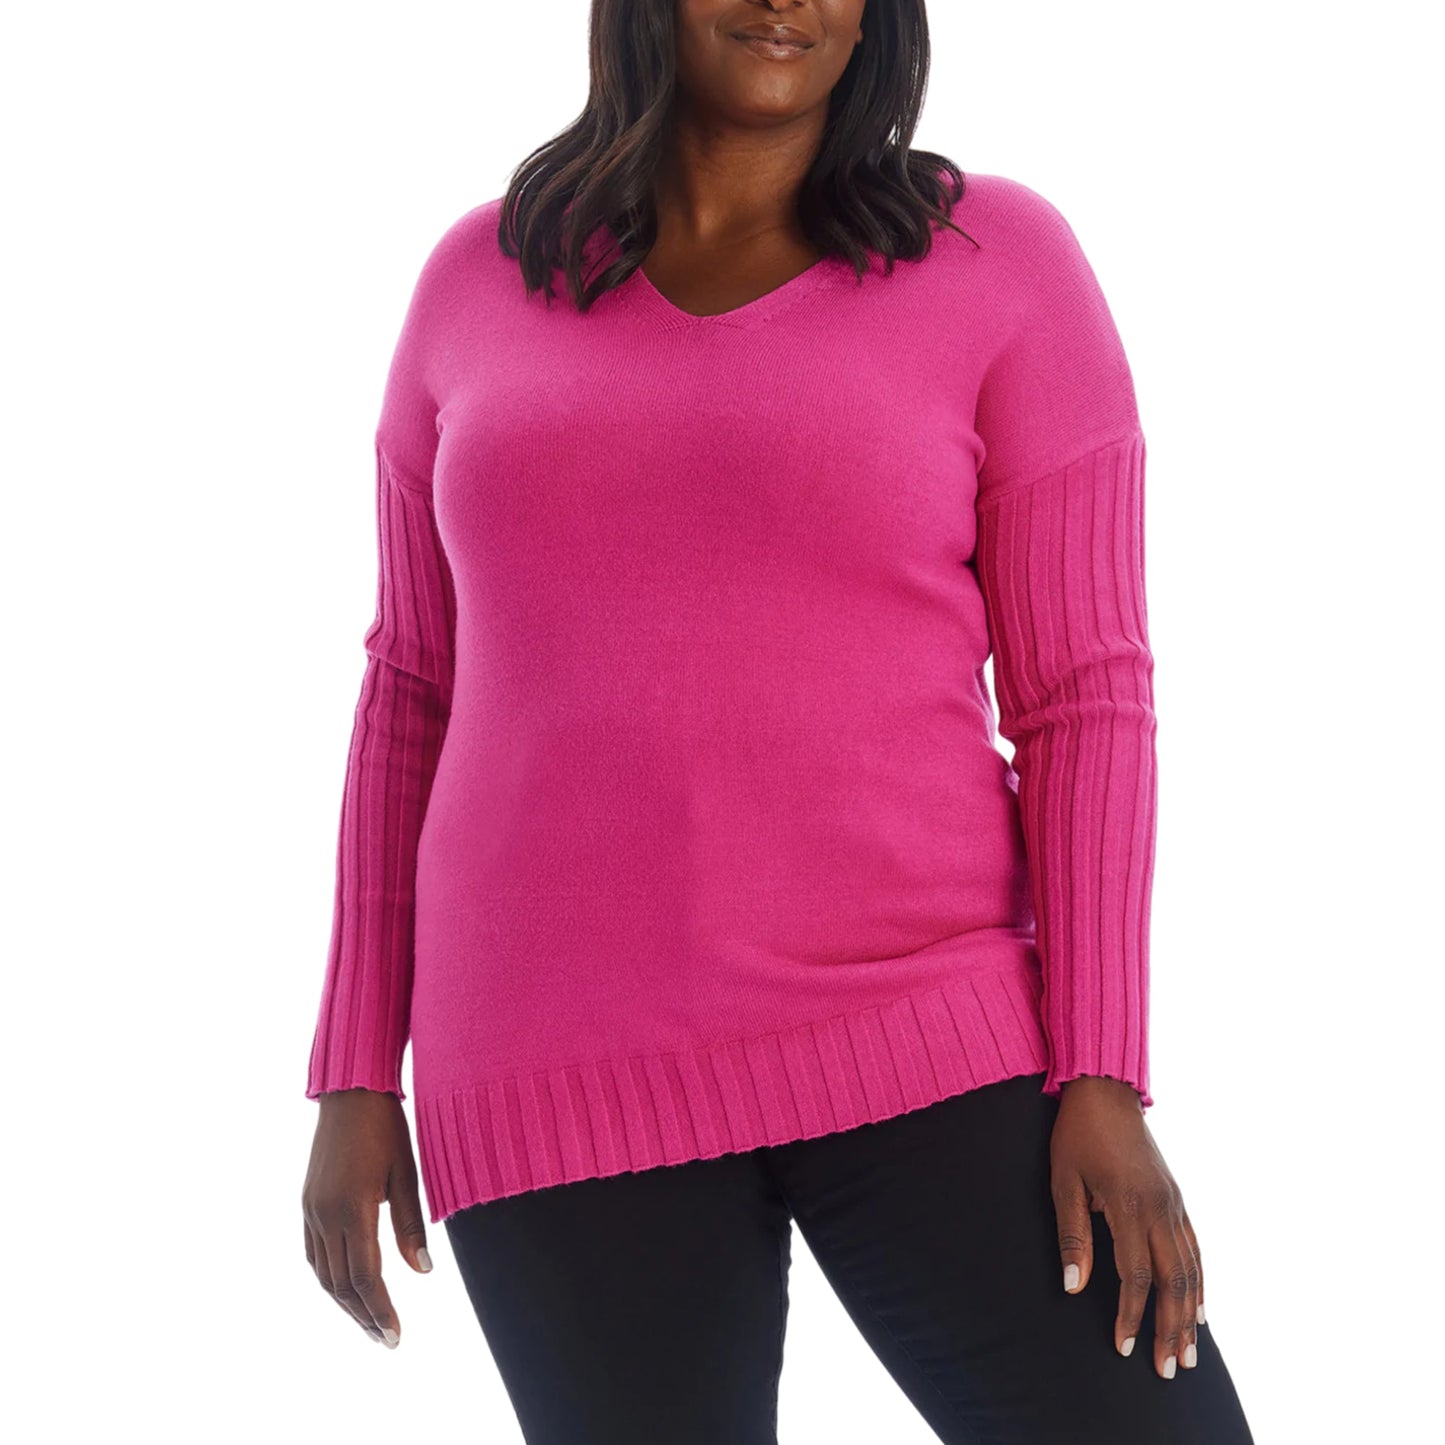 Adyson Parker Women's V-Neck Pullover Soft Knit Tunic Top Sweater